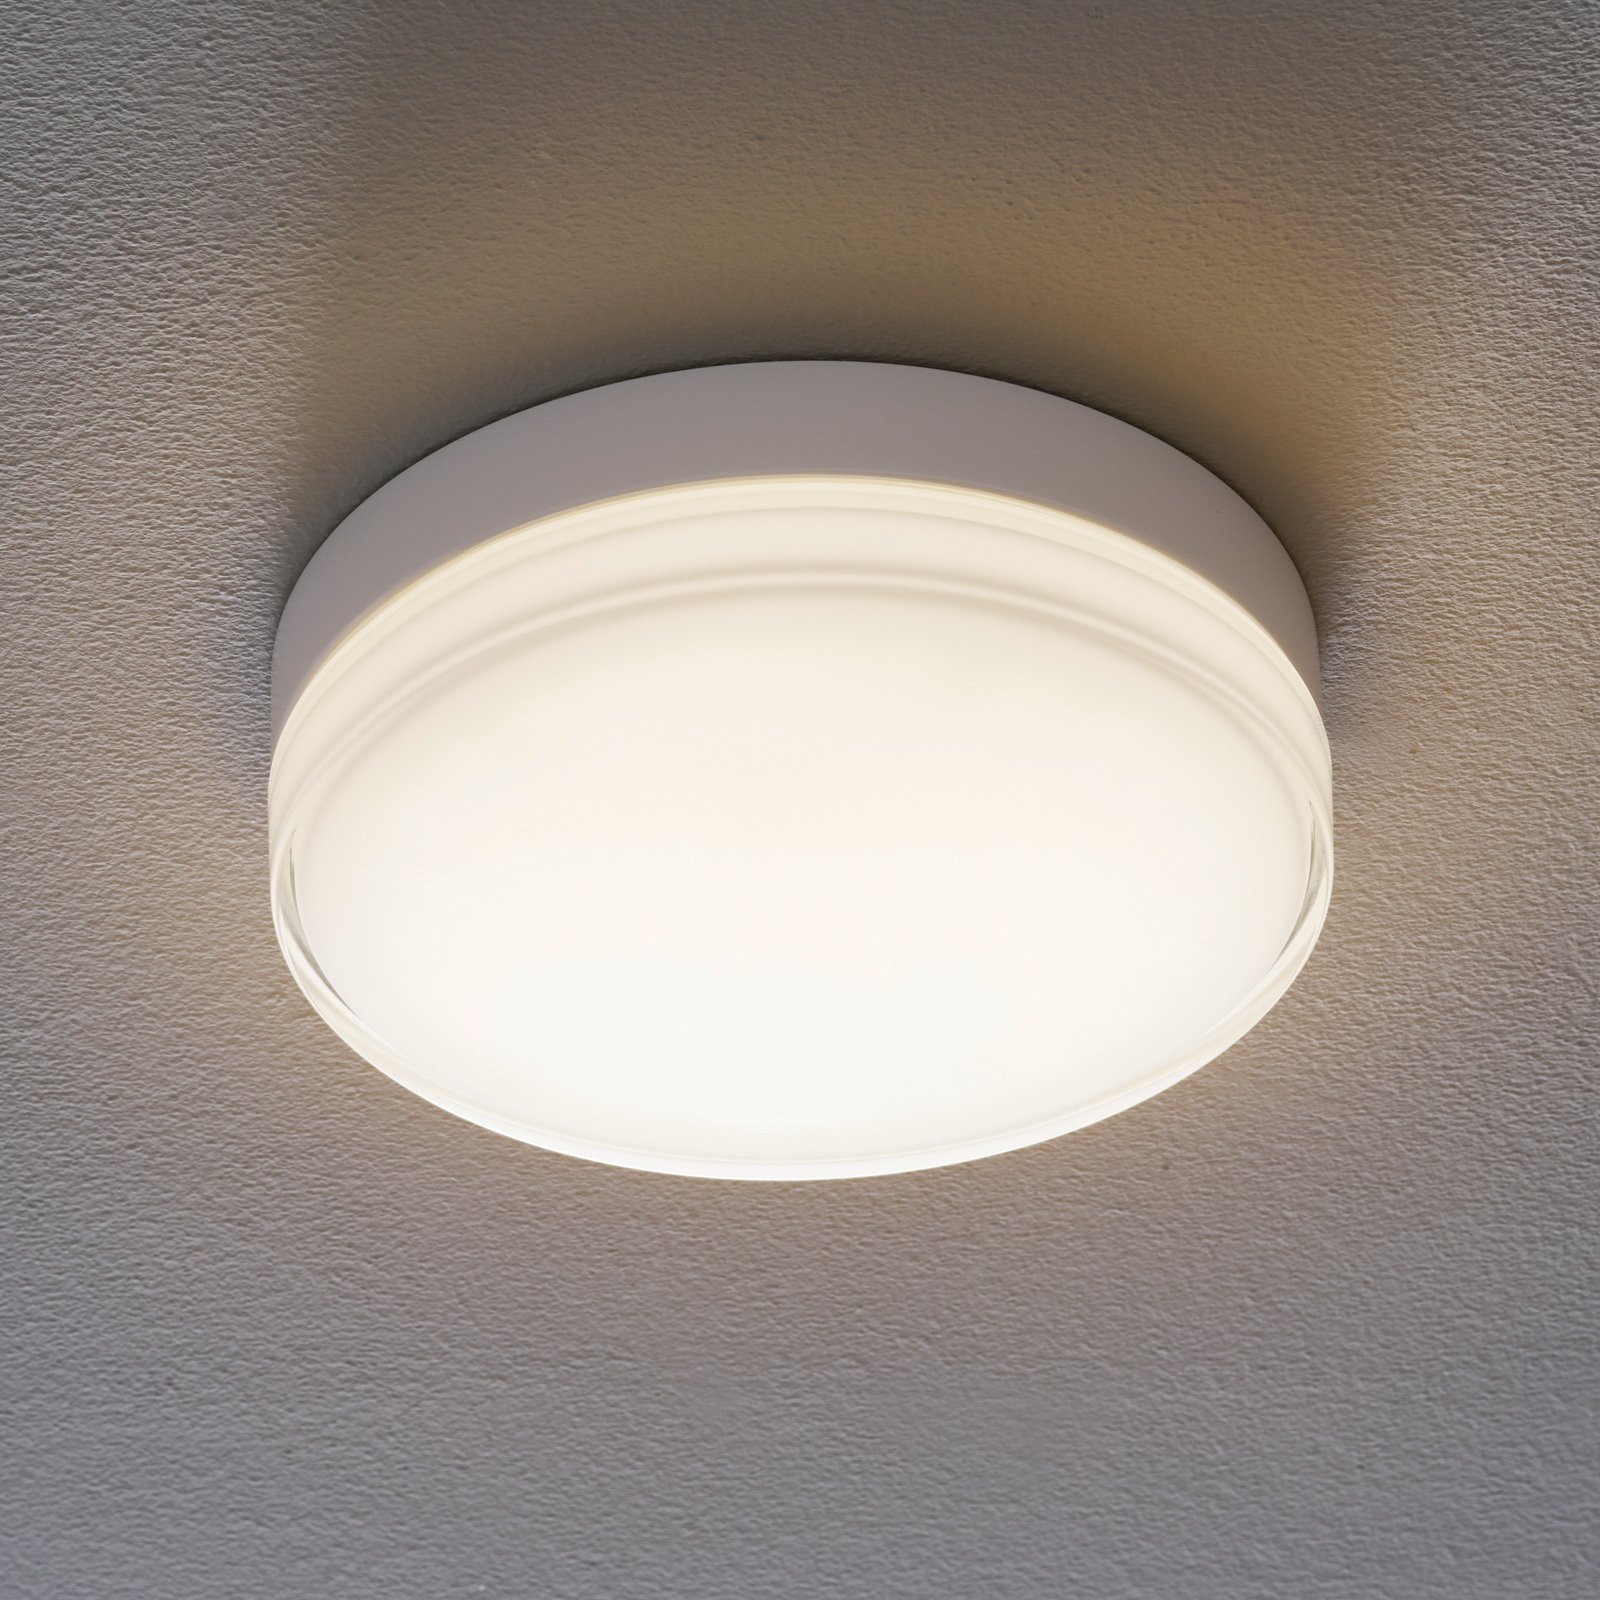 BEGA 12128 lampa sufitowa LED DALI 930 biały 26cm